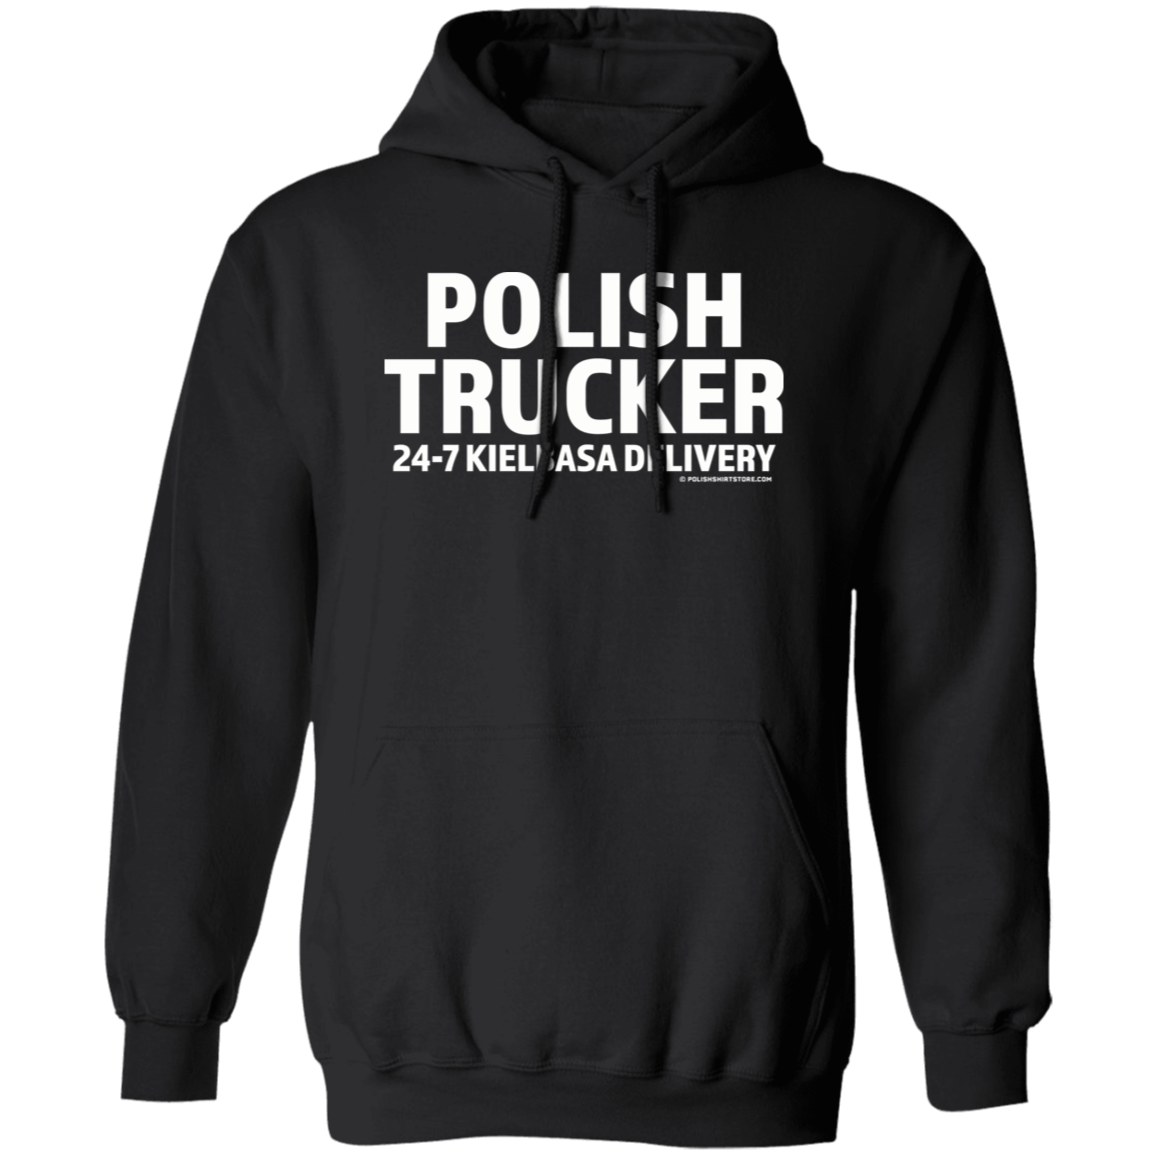 Polish Trucker 24-7 Kielbasa Delivery Apparel CustomCat G185 Pullover Hoodie Black S